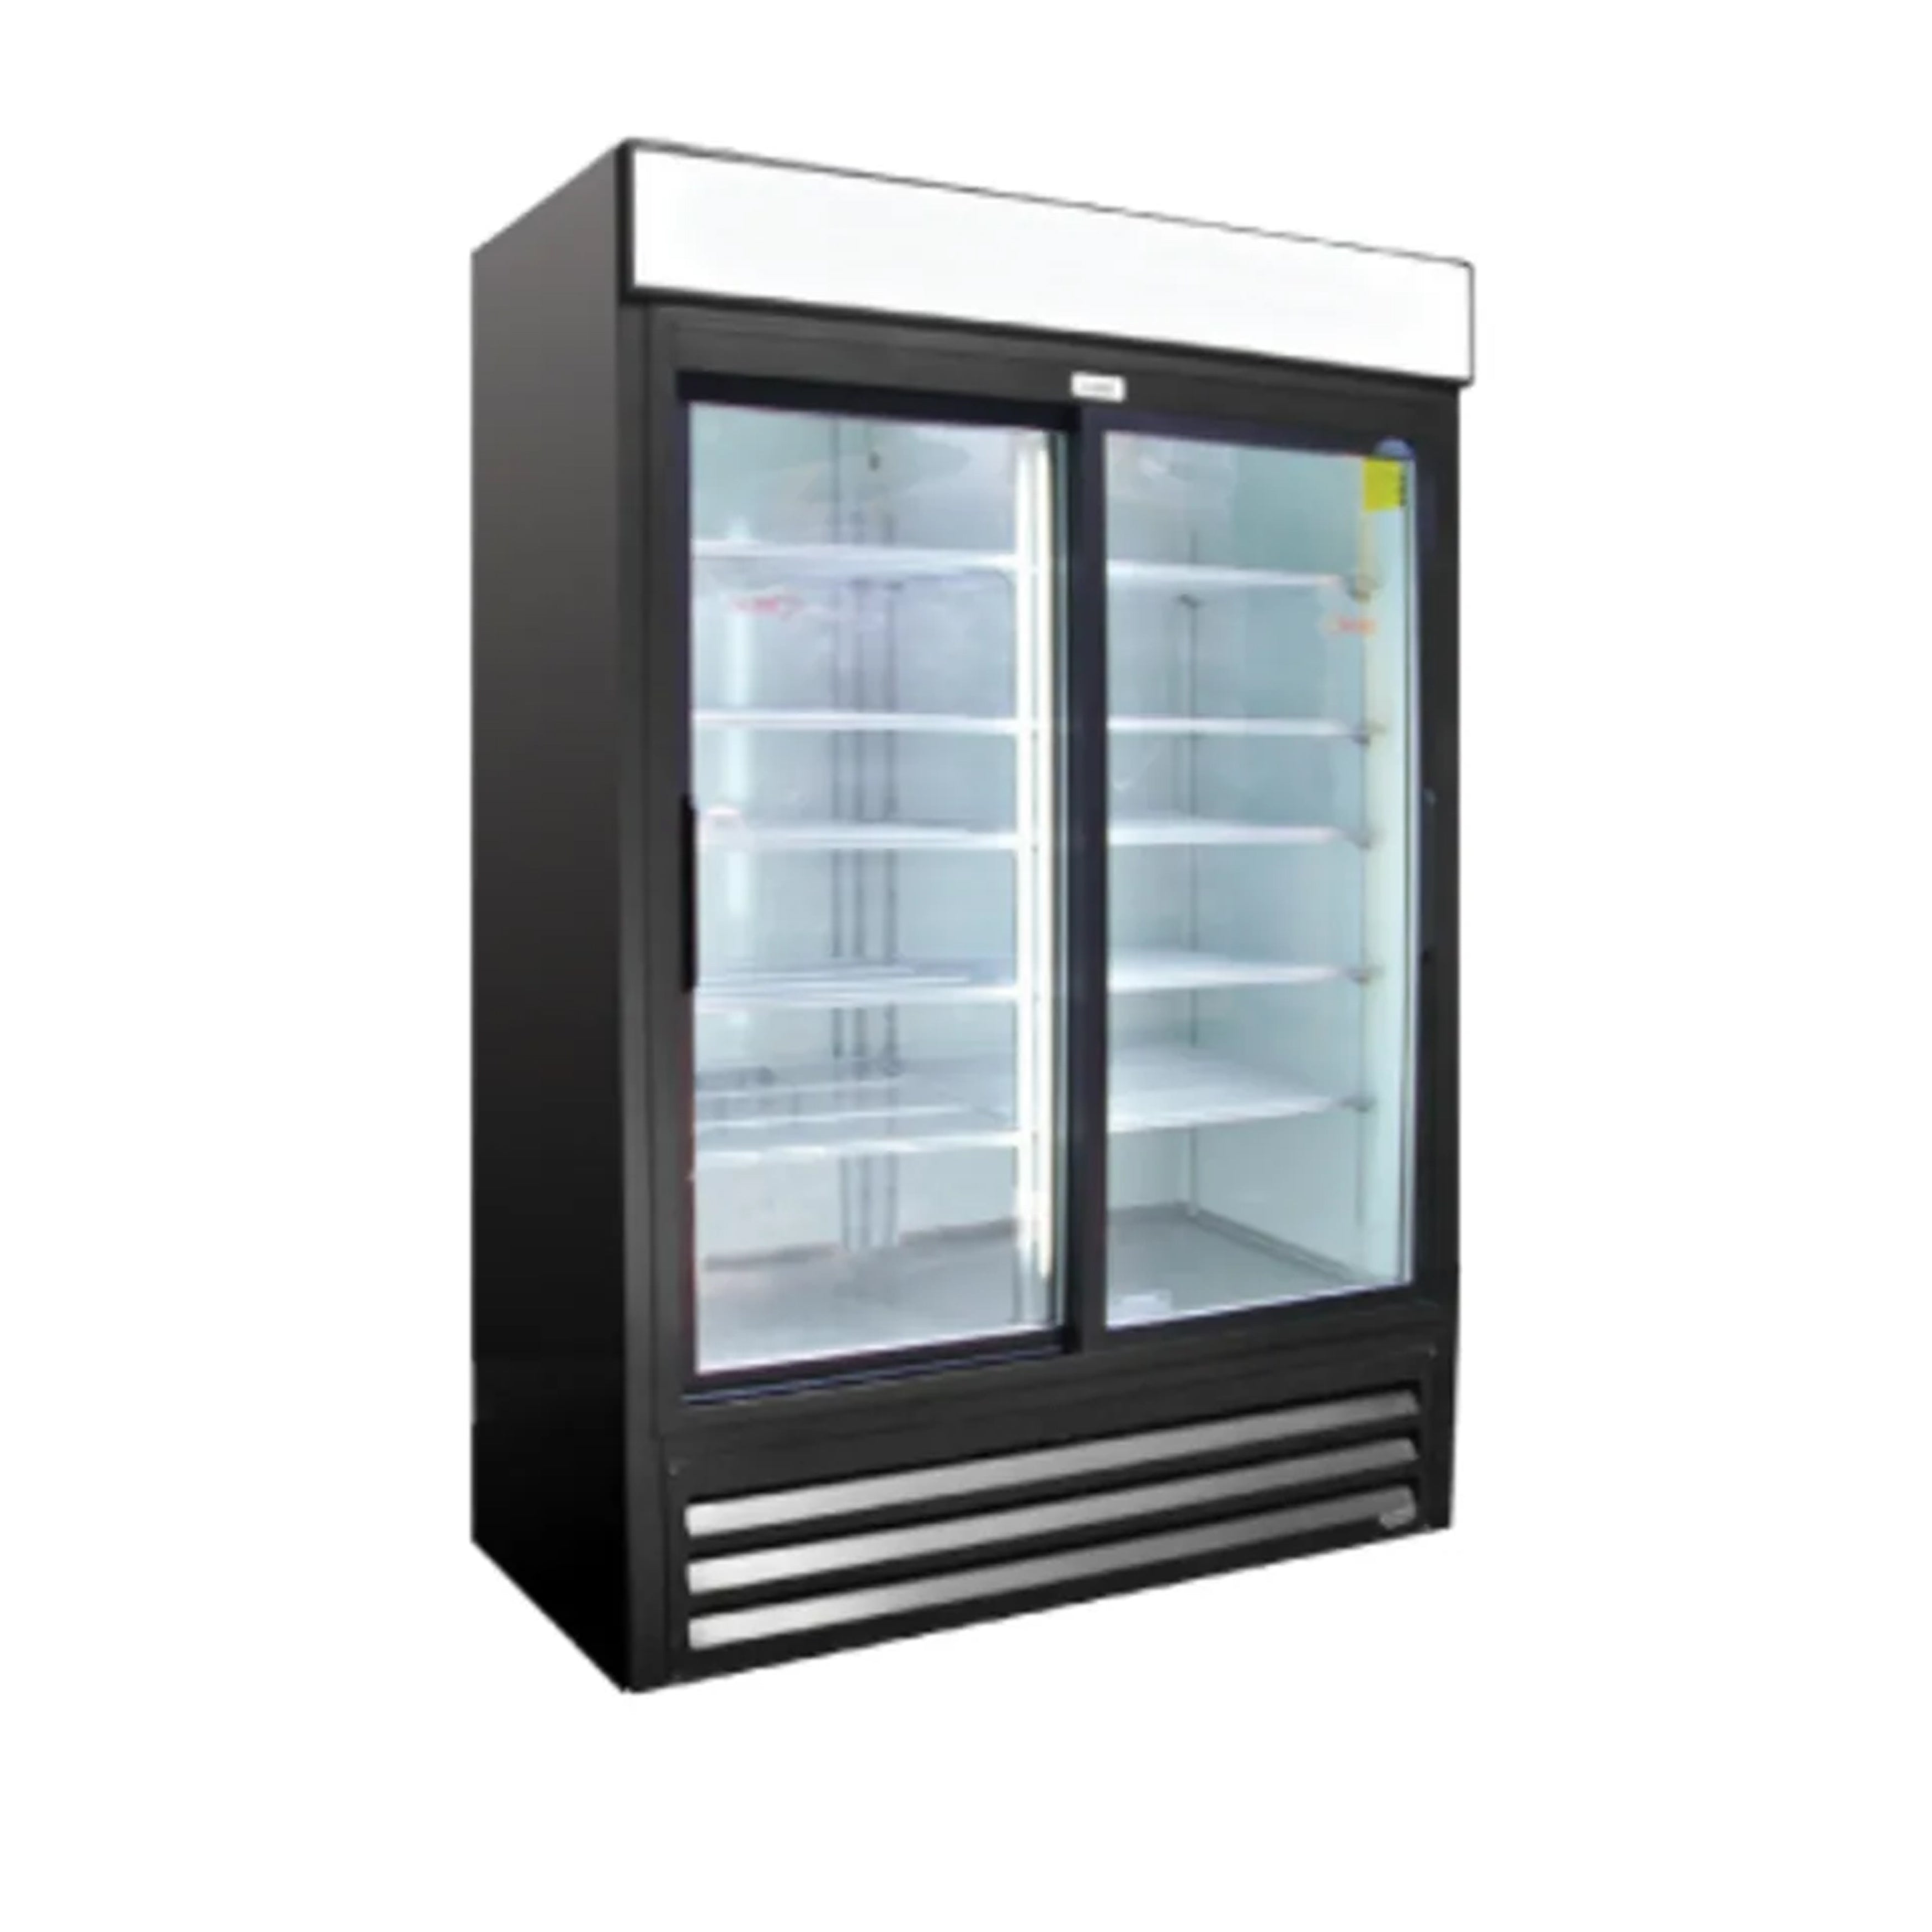 Excellence Industries - VR-45-SLD, 51" Commercial 2 Glass Door Merchandiser Refrigerator 45 cu.ft.